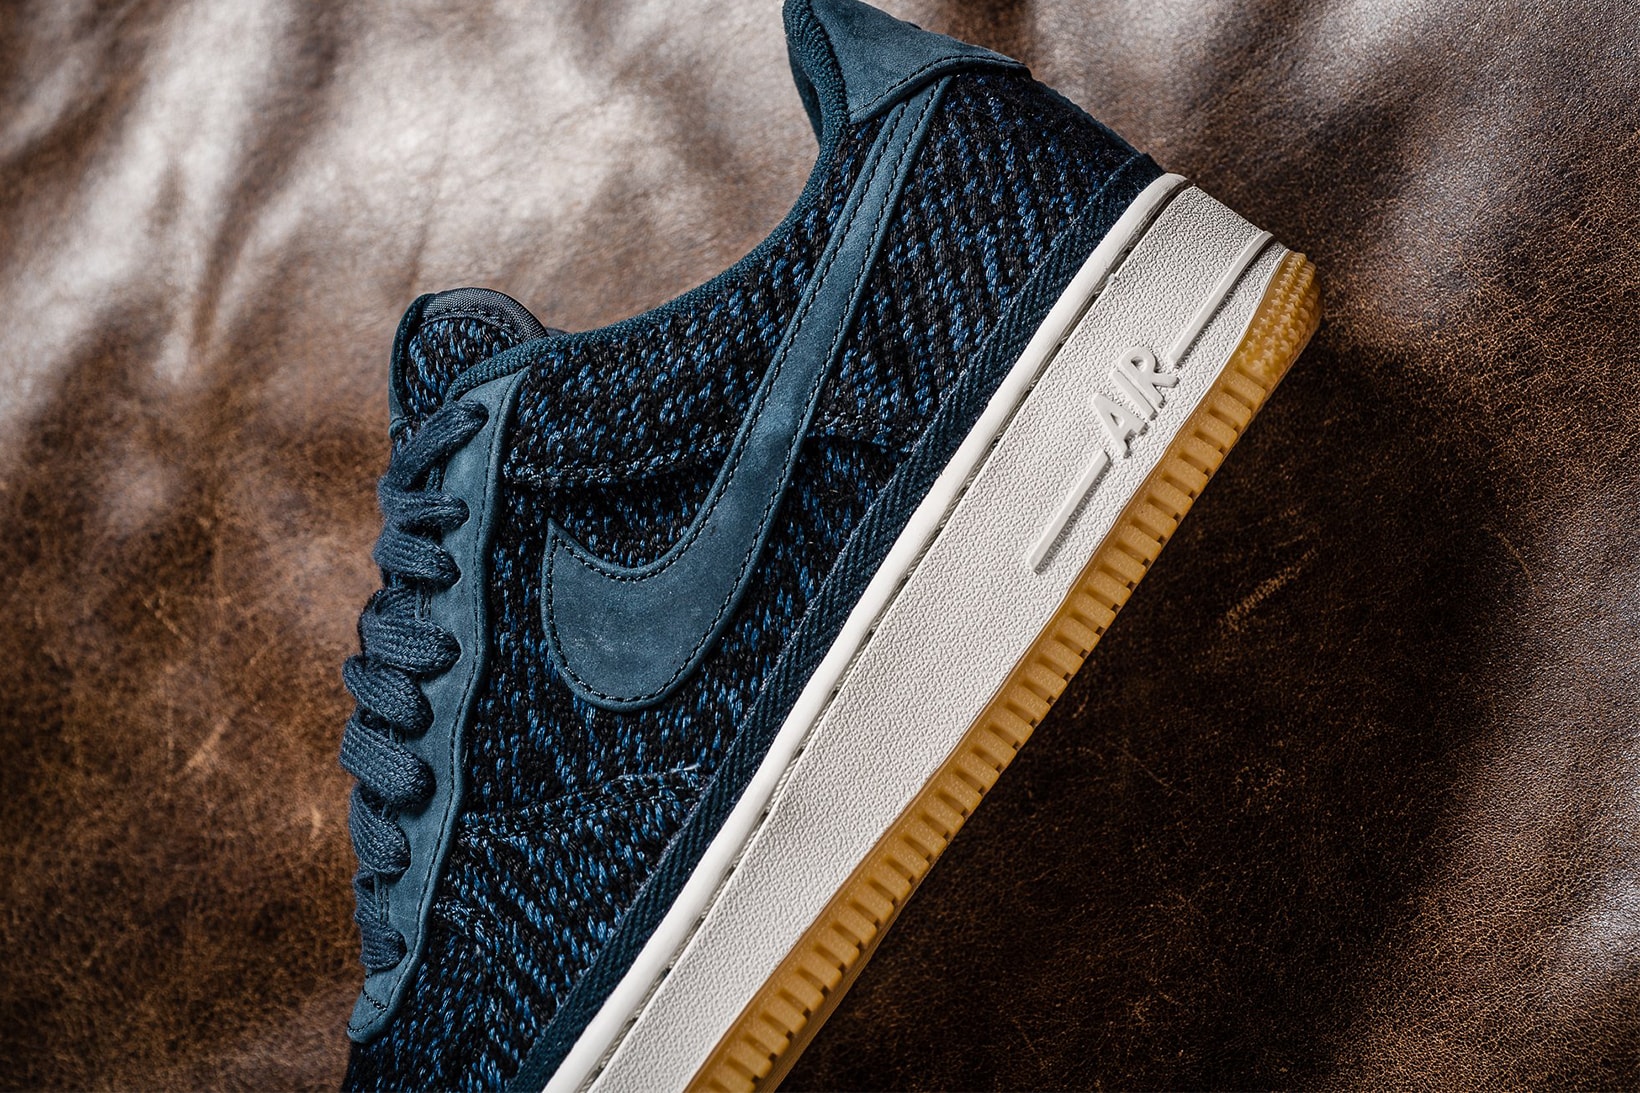 Nike Air Force 1 Low 07 Indigo Wool Gum Sole Sneakers Shoes Footwear 2017 August Release Date Info Sneaker Politics blue navy denim